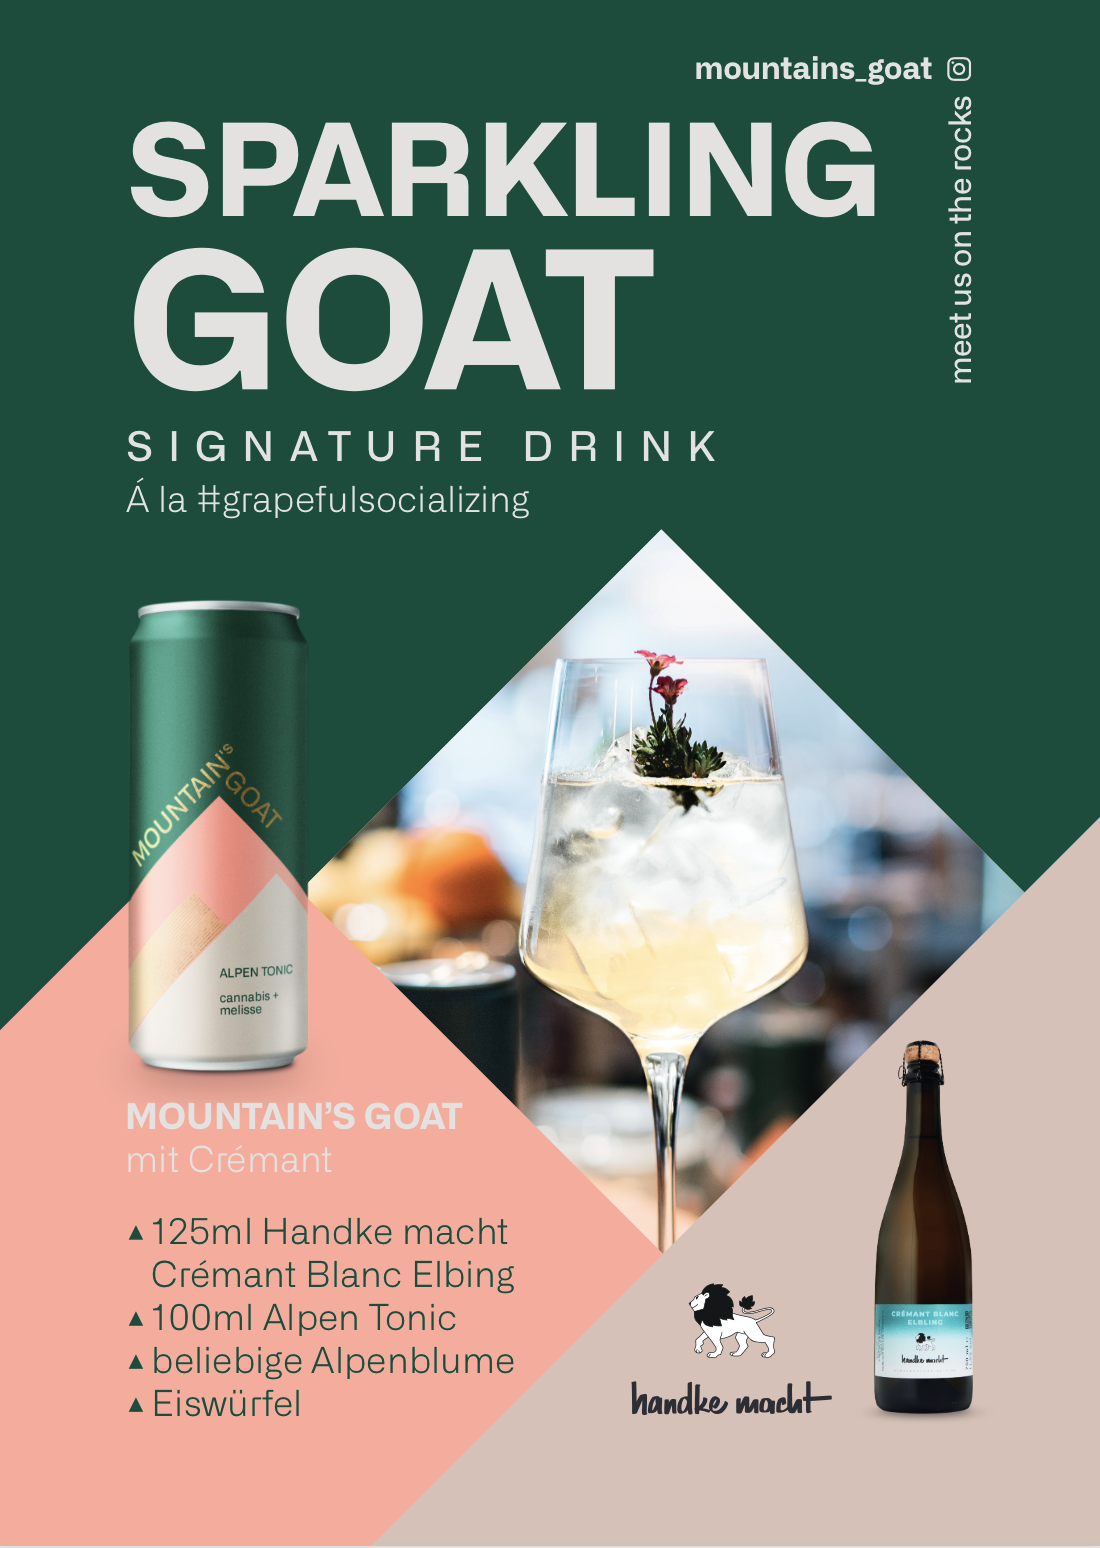 <img src="MOUNTAIN'S GOAT_Signature Drink_Sparkling Goat.jpg" alt="Ein Drink zum Zelebrieren. MOUNTAIN’S GOAT Alpen Tonic vereint Handke macht Crémant Blanc Elbing.">